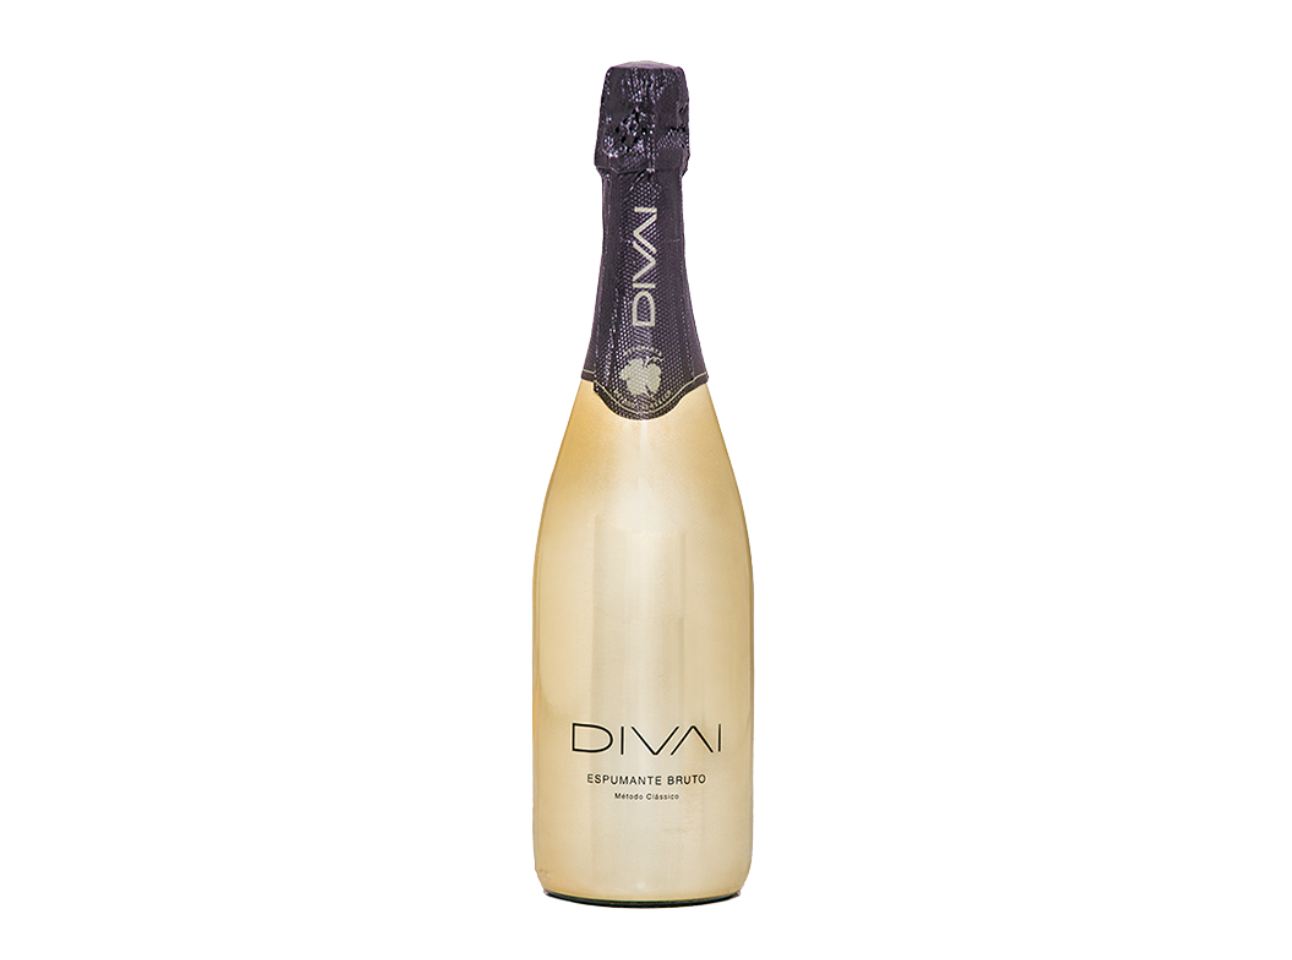 DIVAI Sparkling wine 0.75l